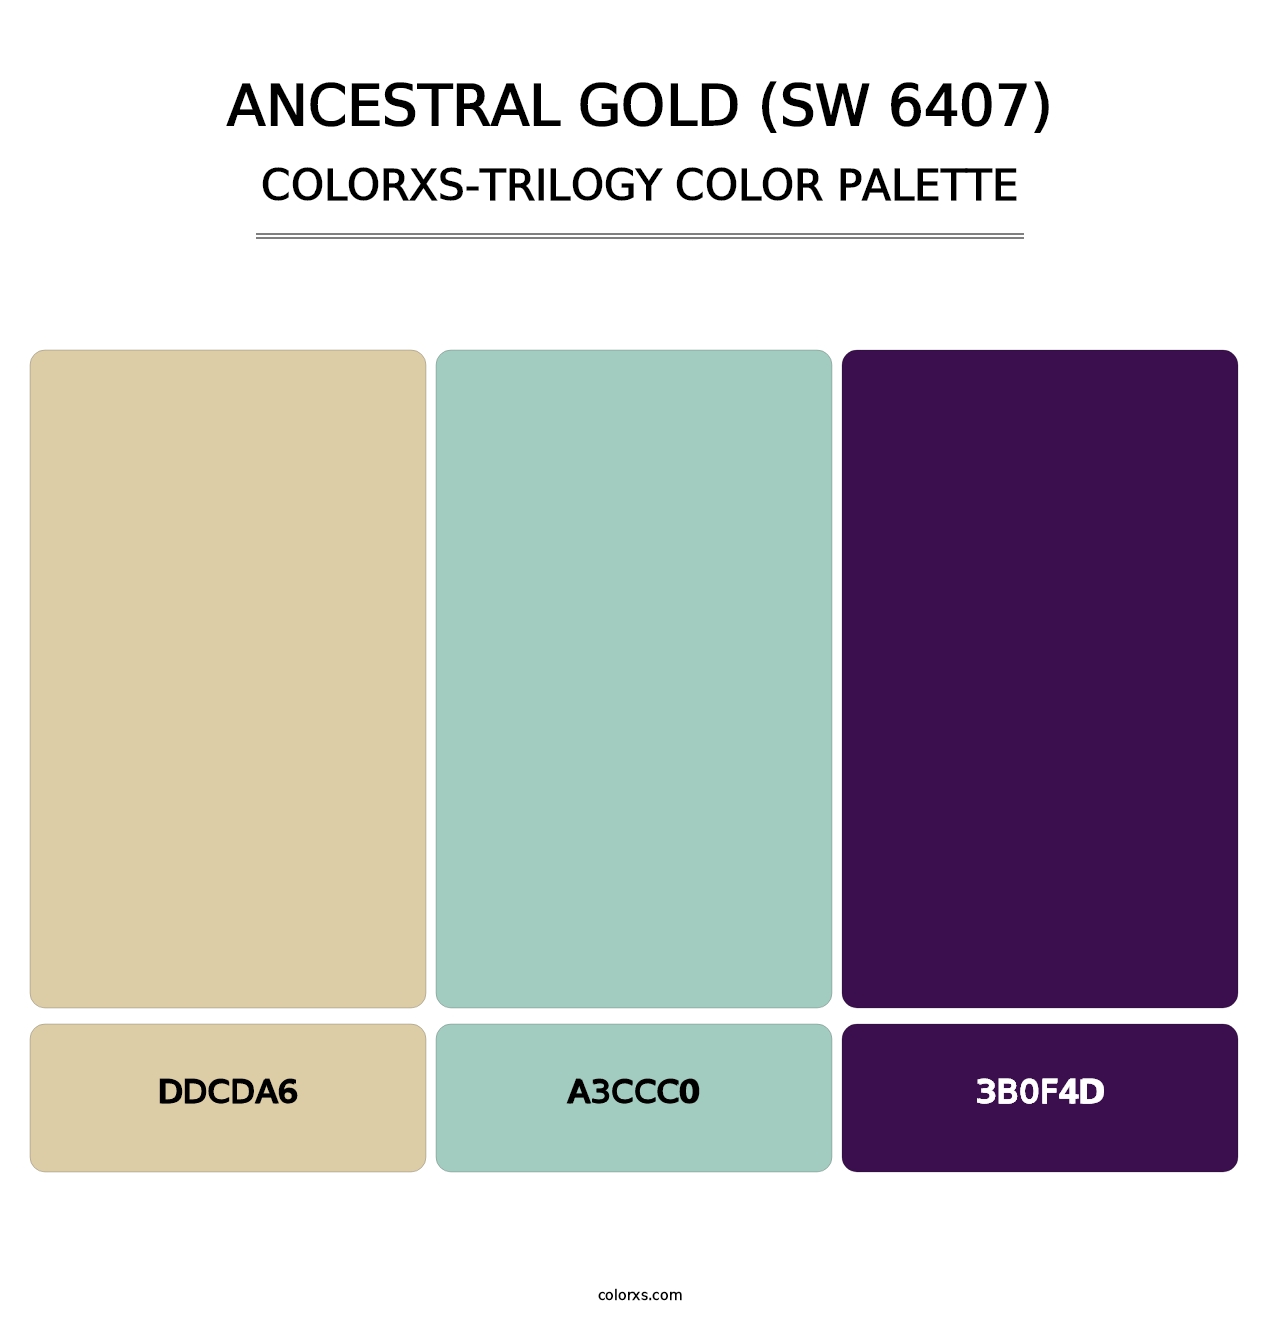 Ancestral Gold (SW 6407) - Colorxs Trilogy Palette